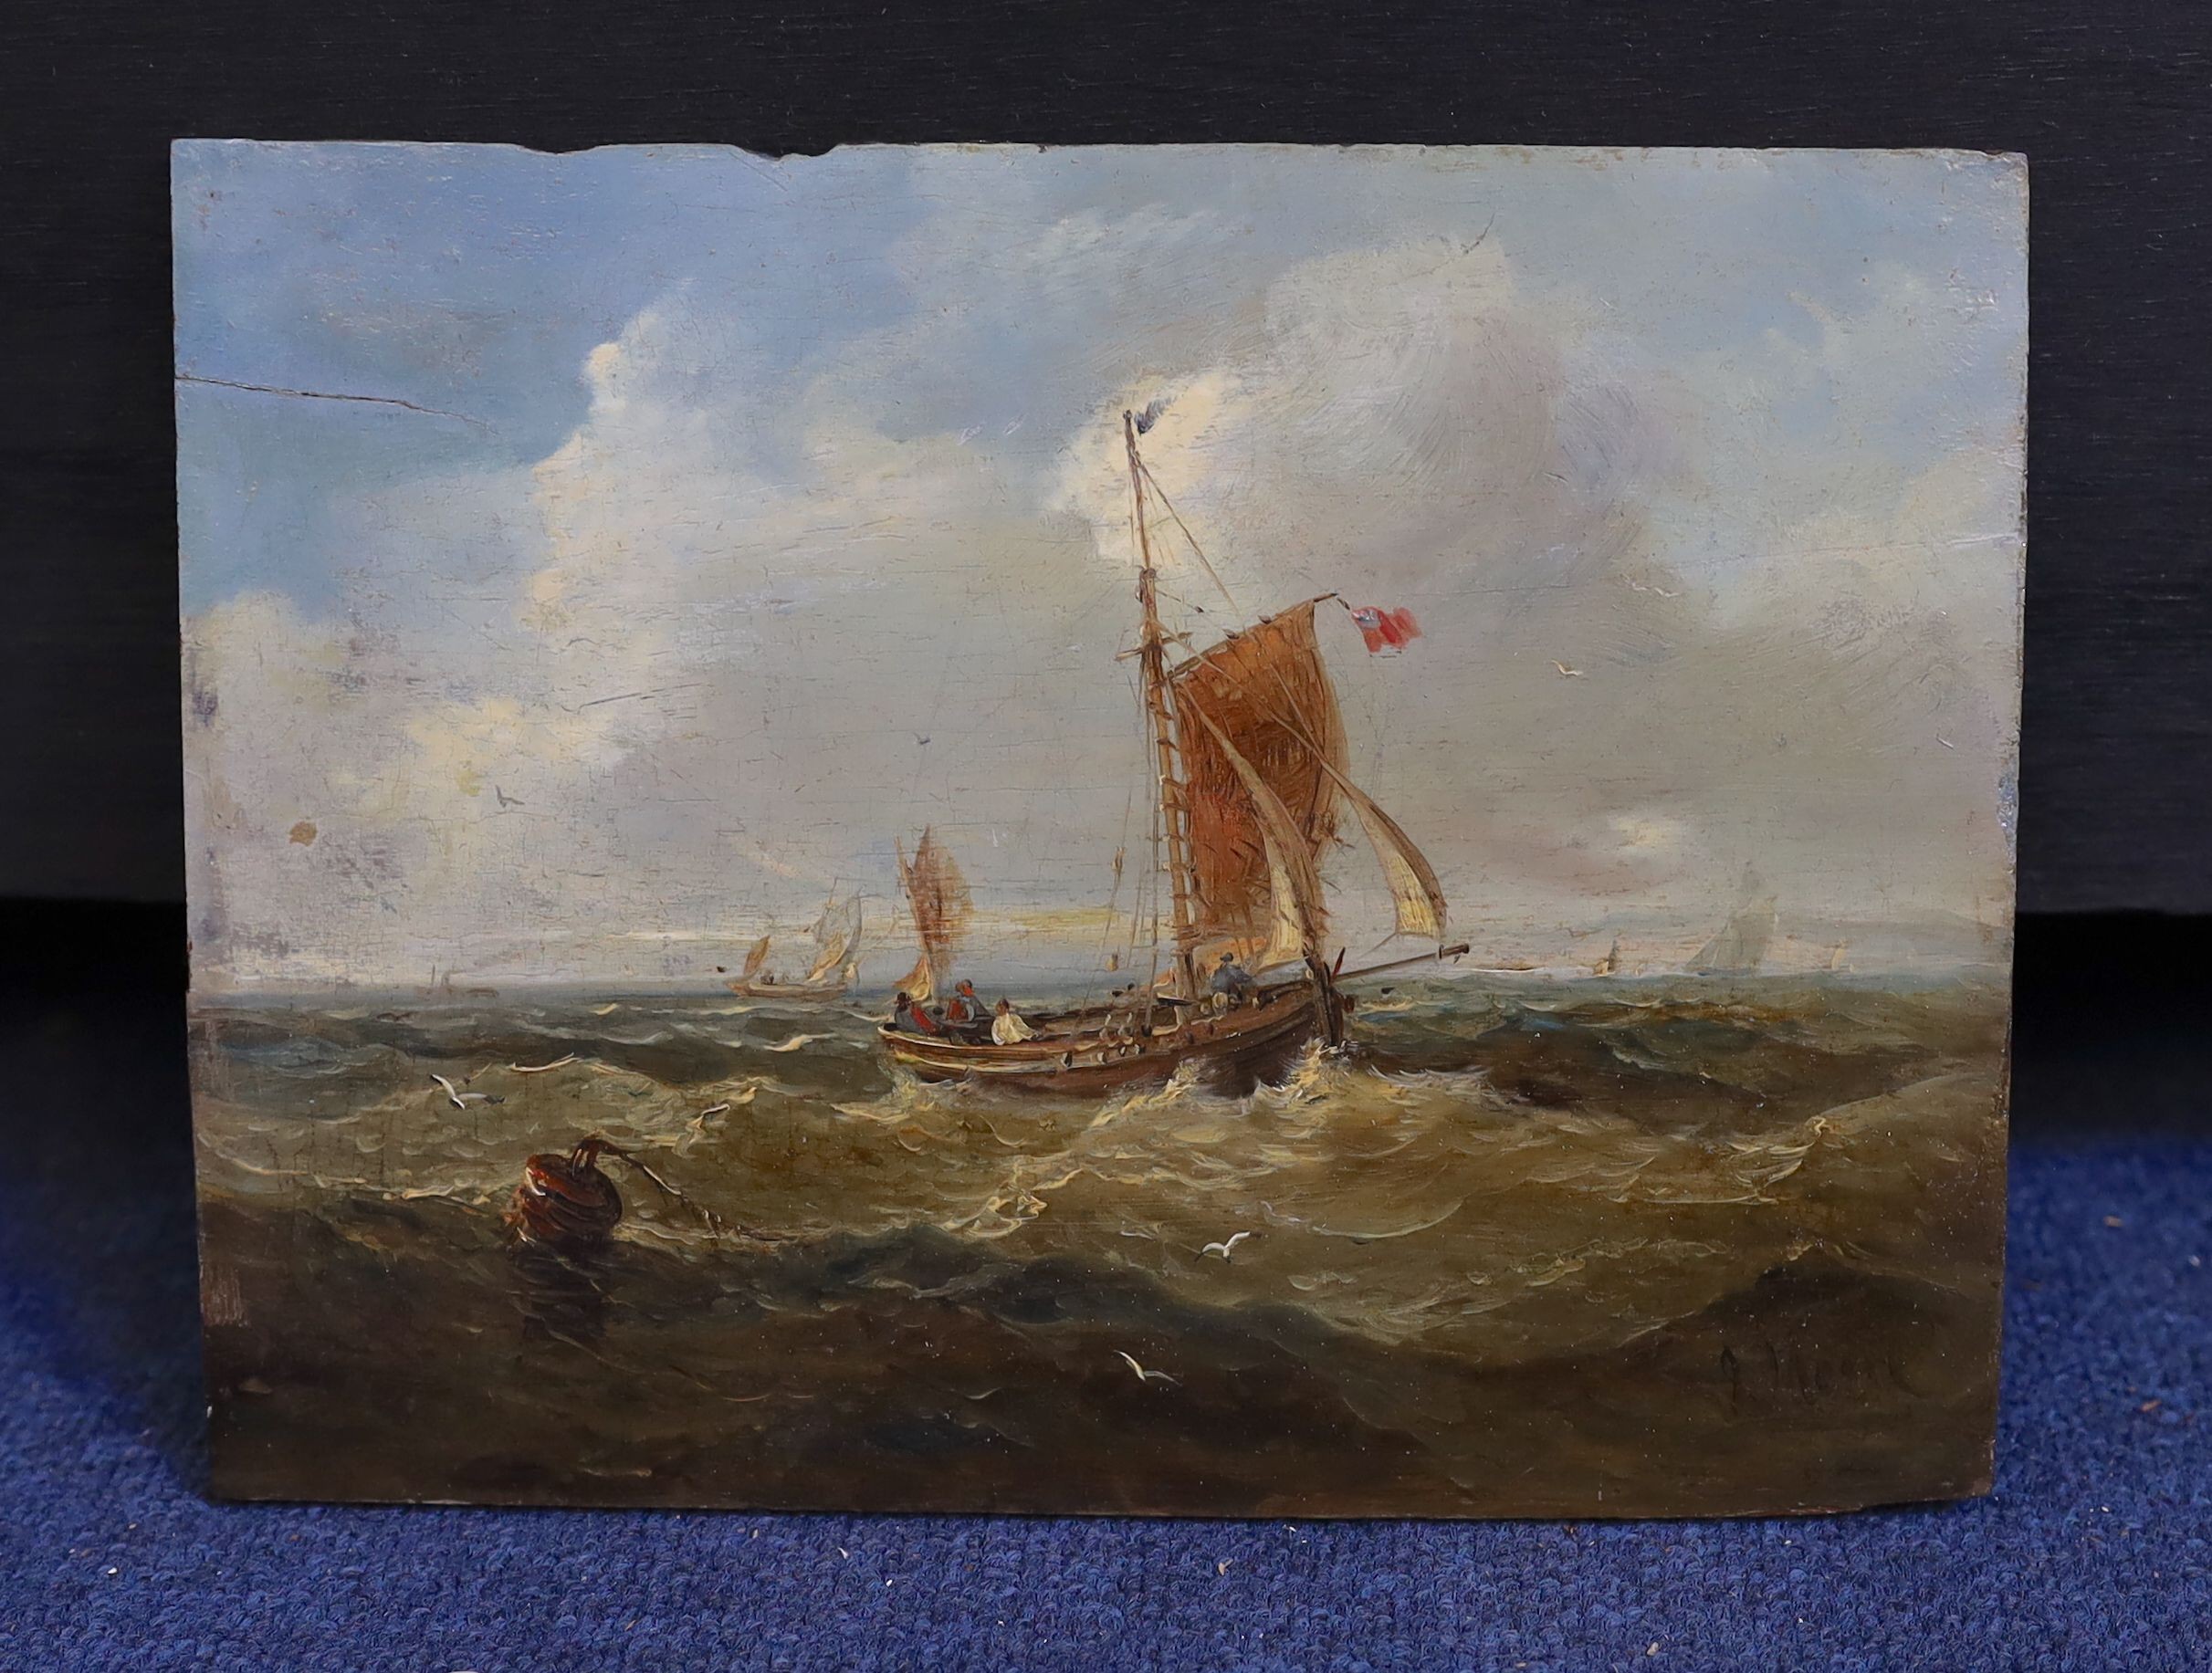 John Moore of Ipswich (1820-1902), Fishing boats off the coast, oil on wooden panel, 18 x 24cm, unframed